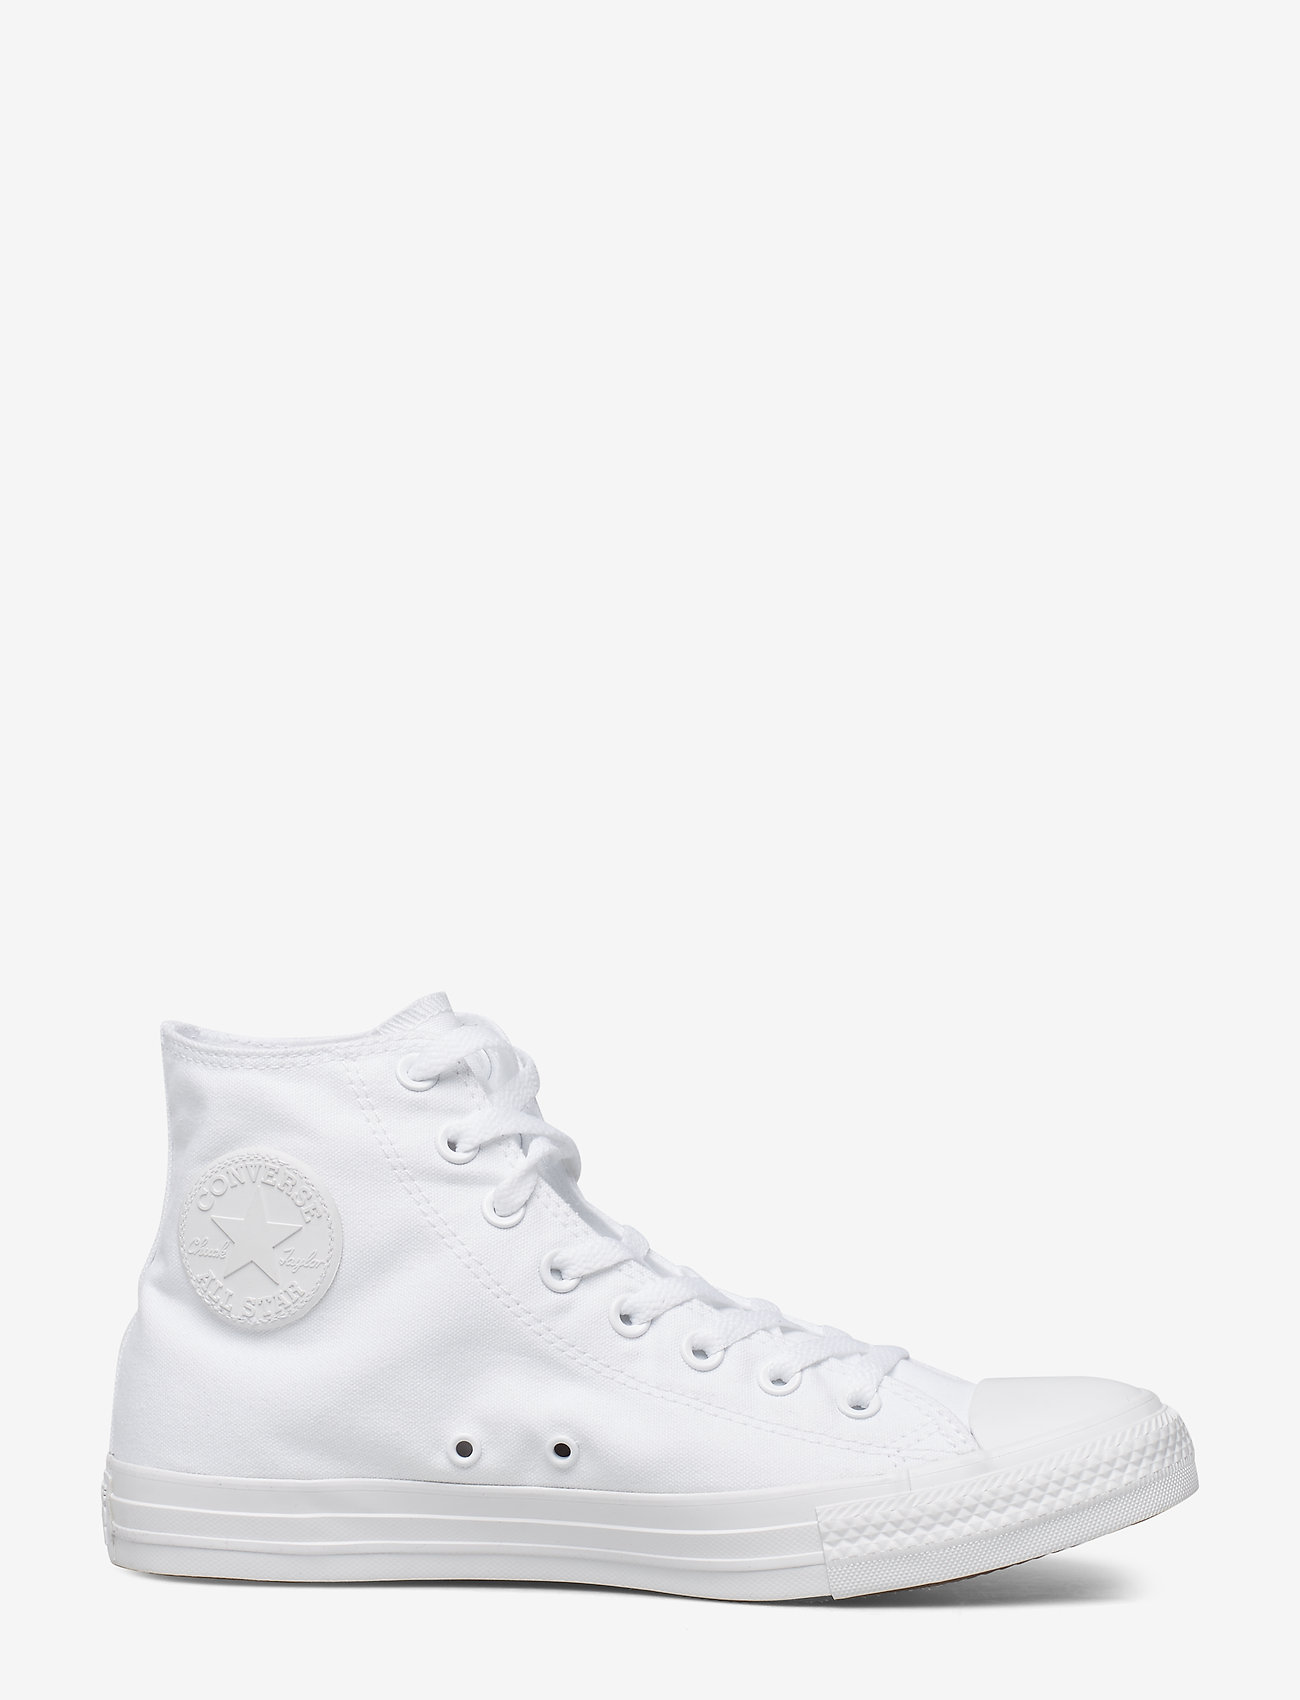 Converse - Chuck Taylor All Star Seasonal - high top sneakers - white monochrome - 1